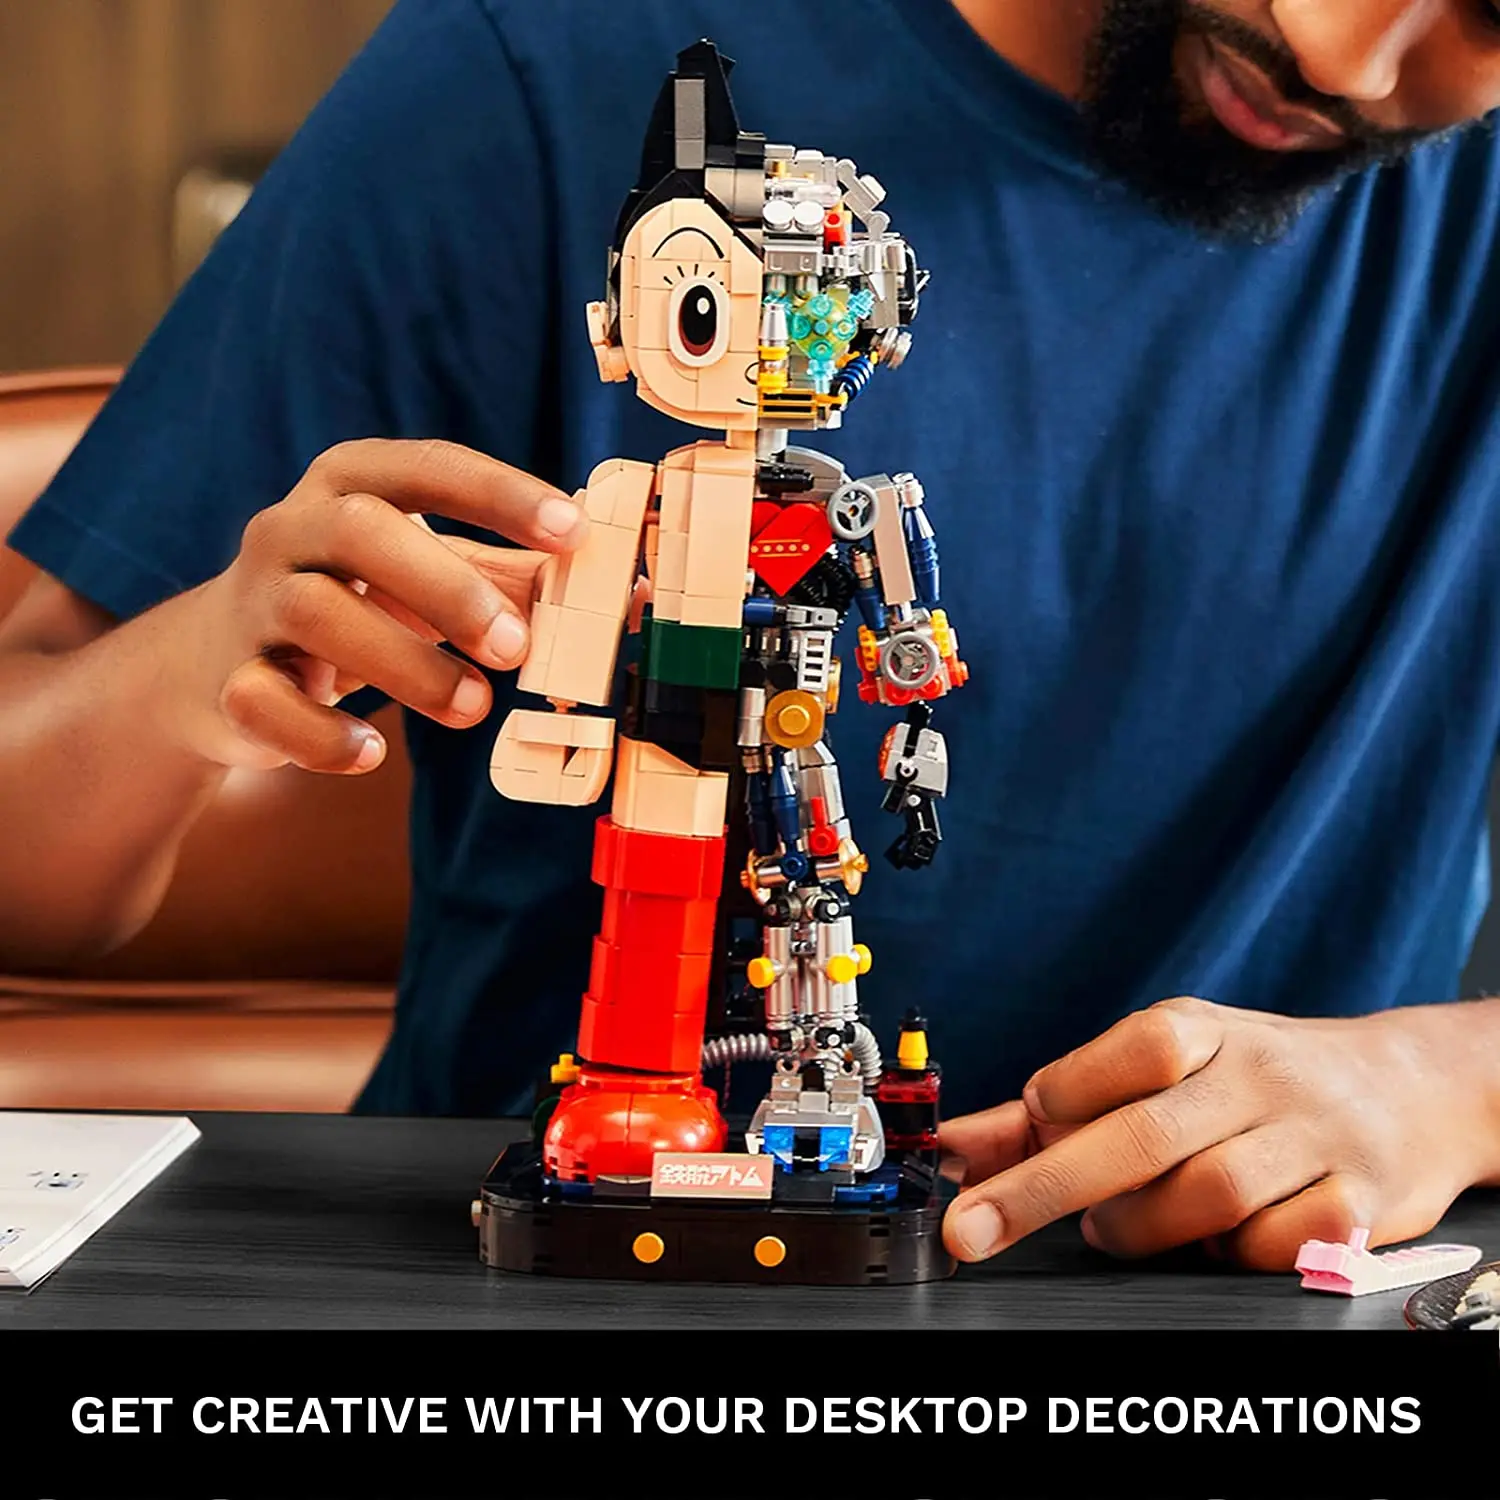 

Pantasy Astro Boy Building Blocks Cool Bricks Sets, Creative Collectible Build-and-Display Model for Home,No Box PDF manual Toys